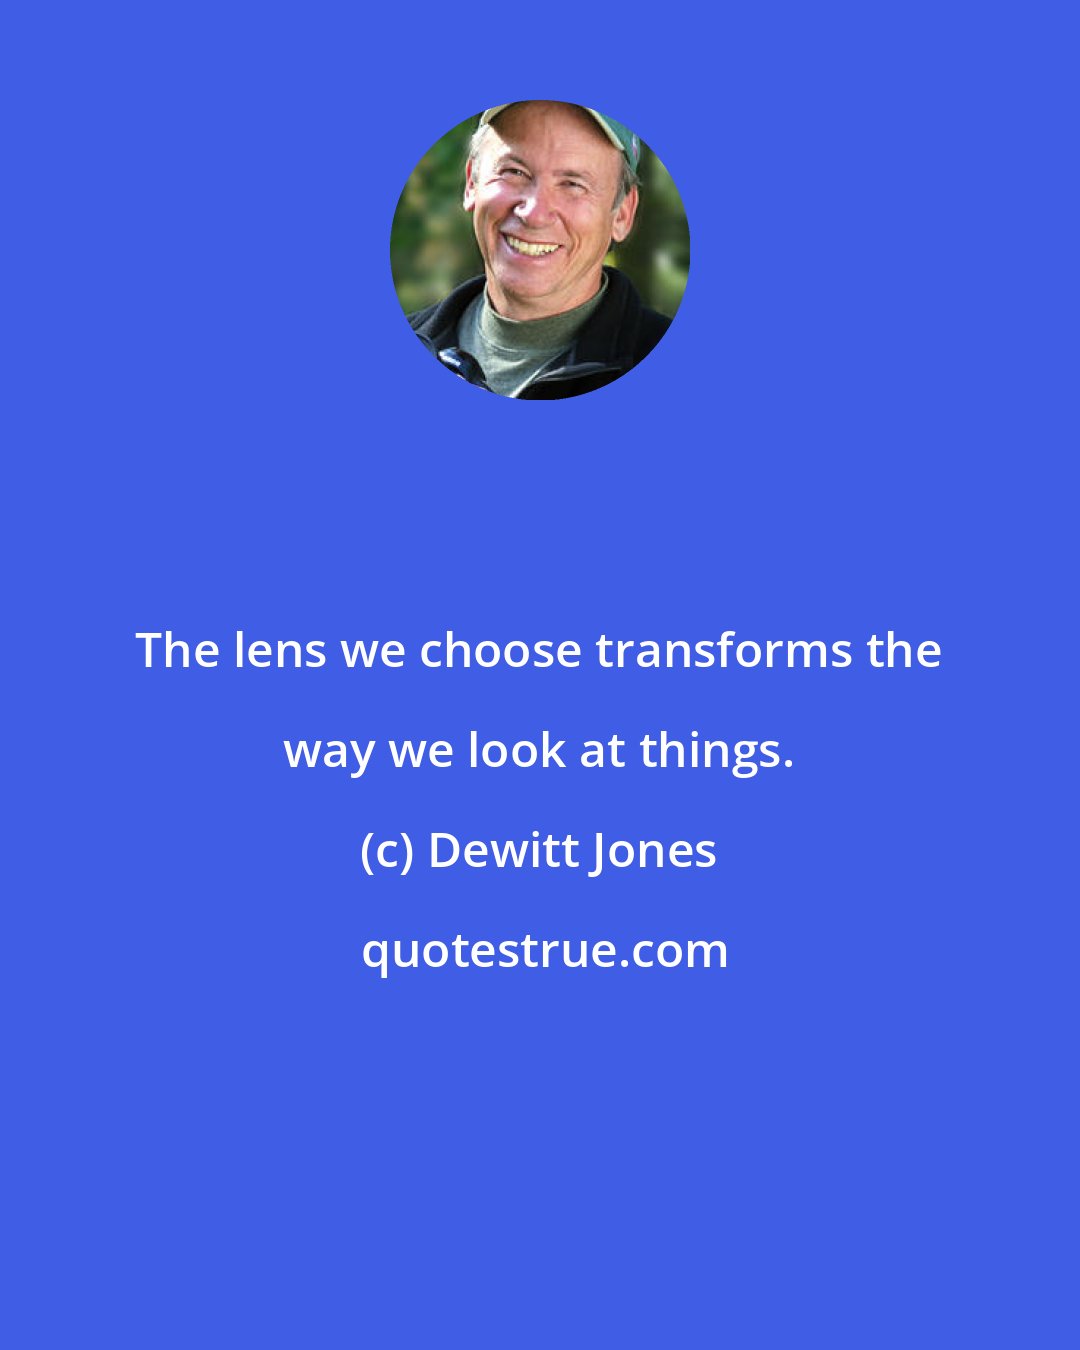 Dewitt Jones: The lens we choose transforms the way we look at things.